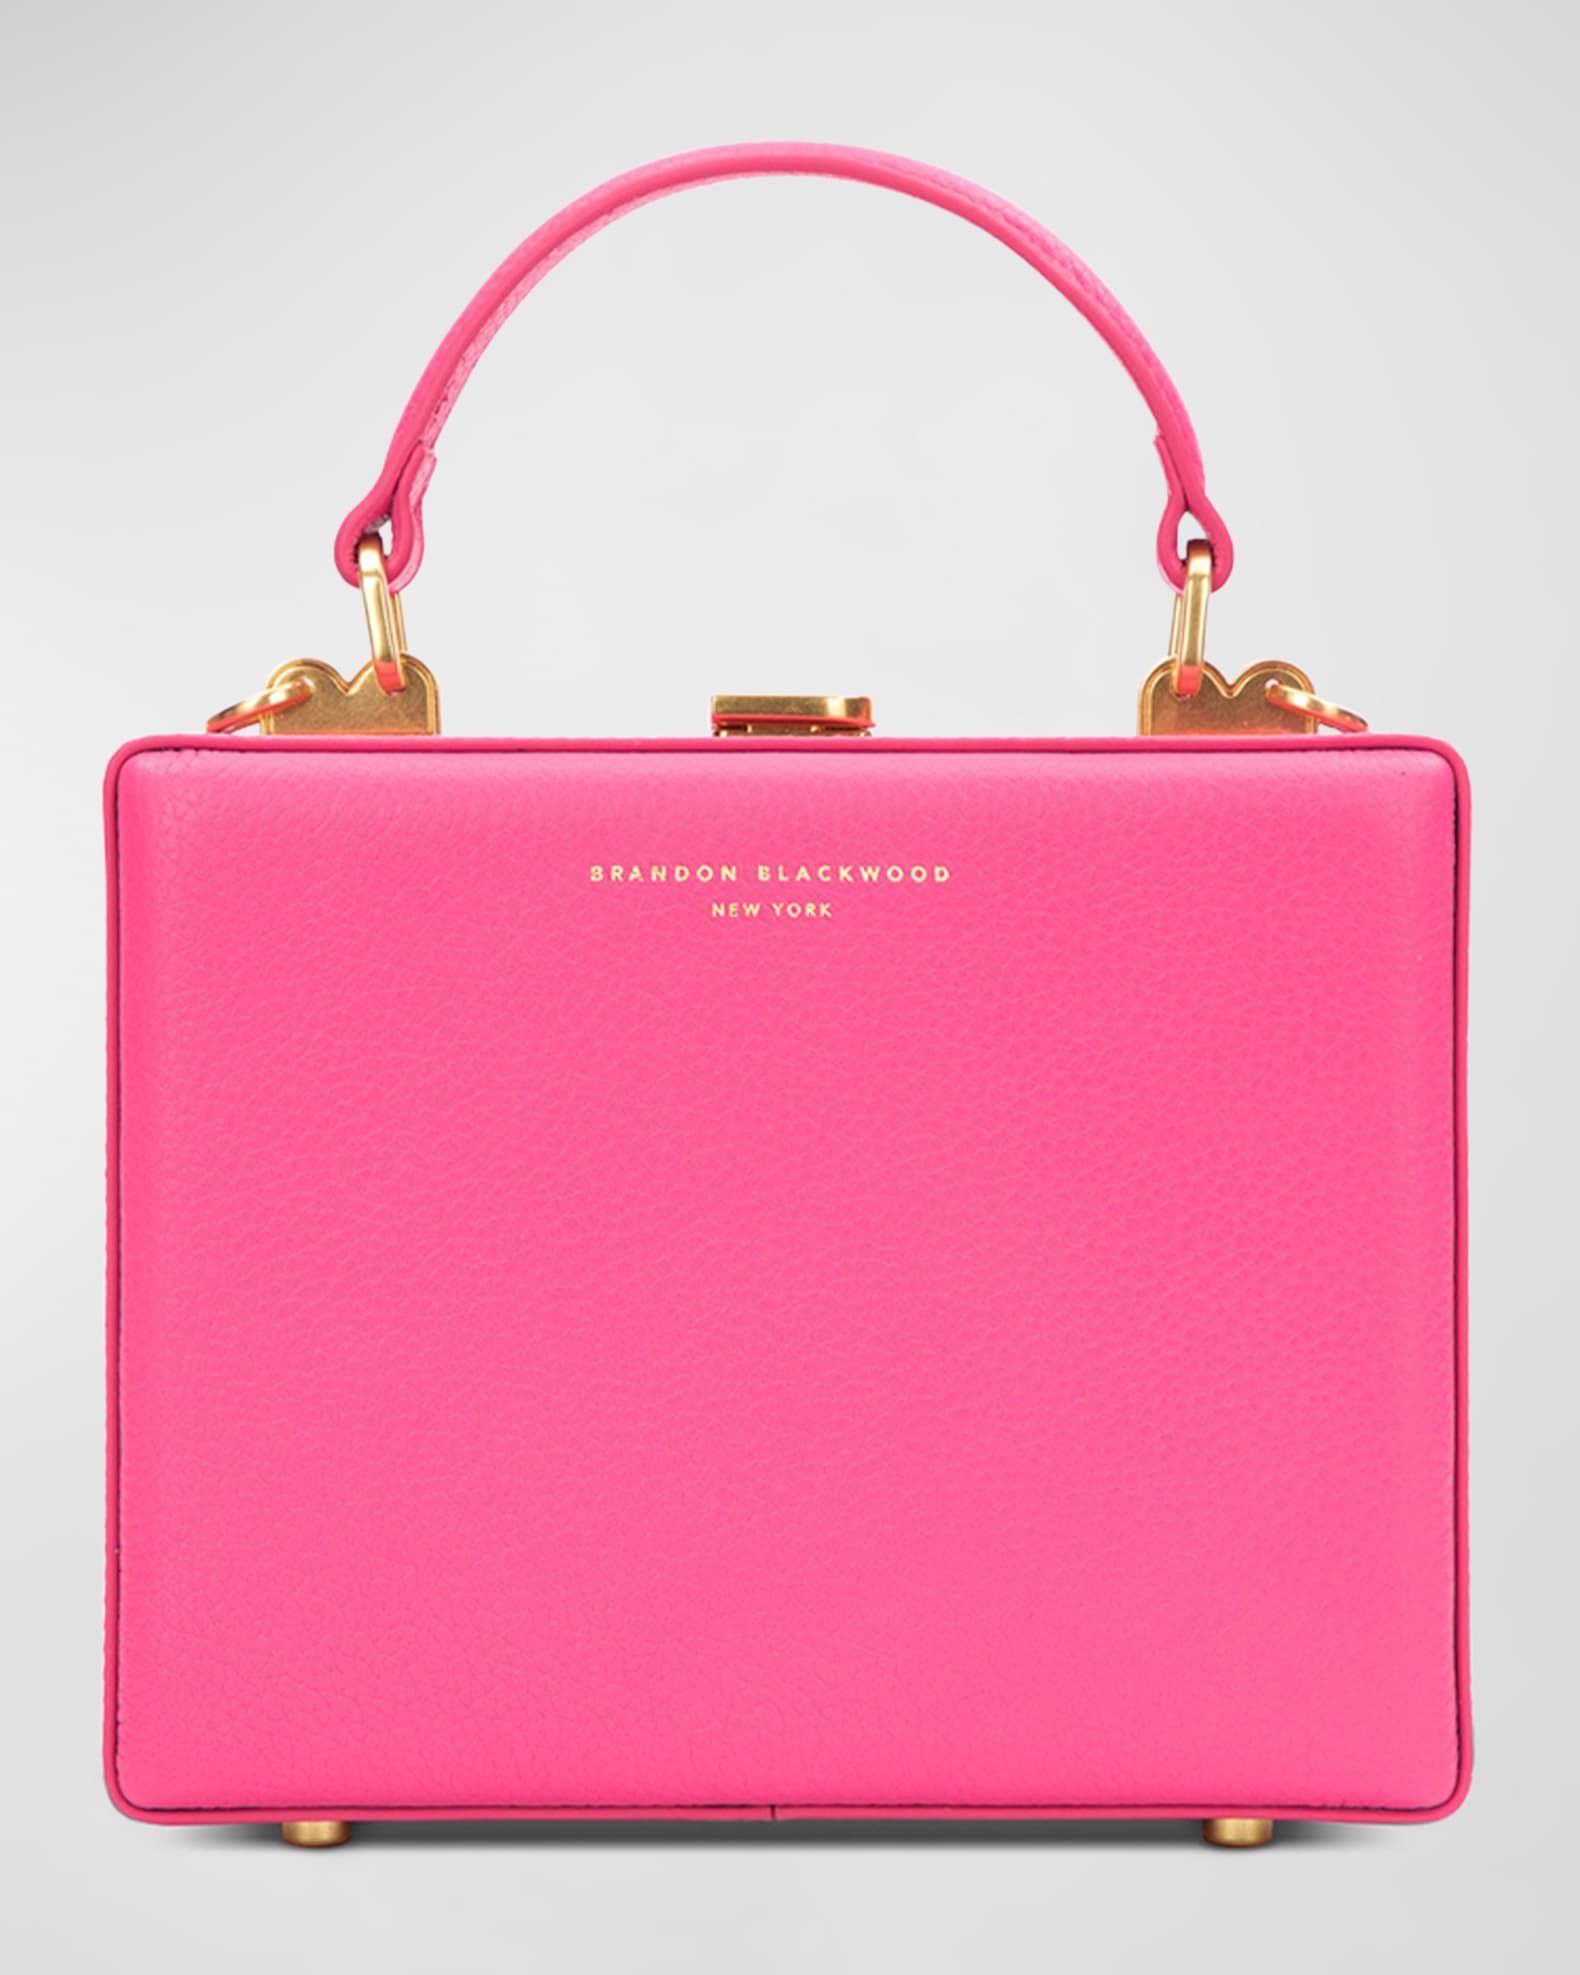 Luxury designer handbags, crafted in Spain | Strathberry